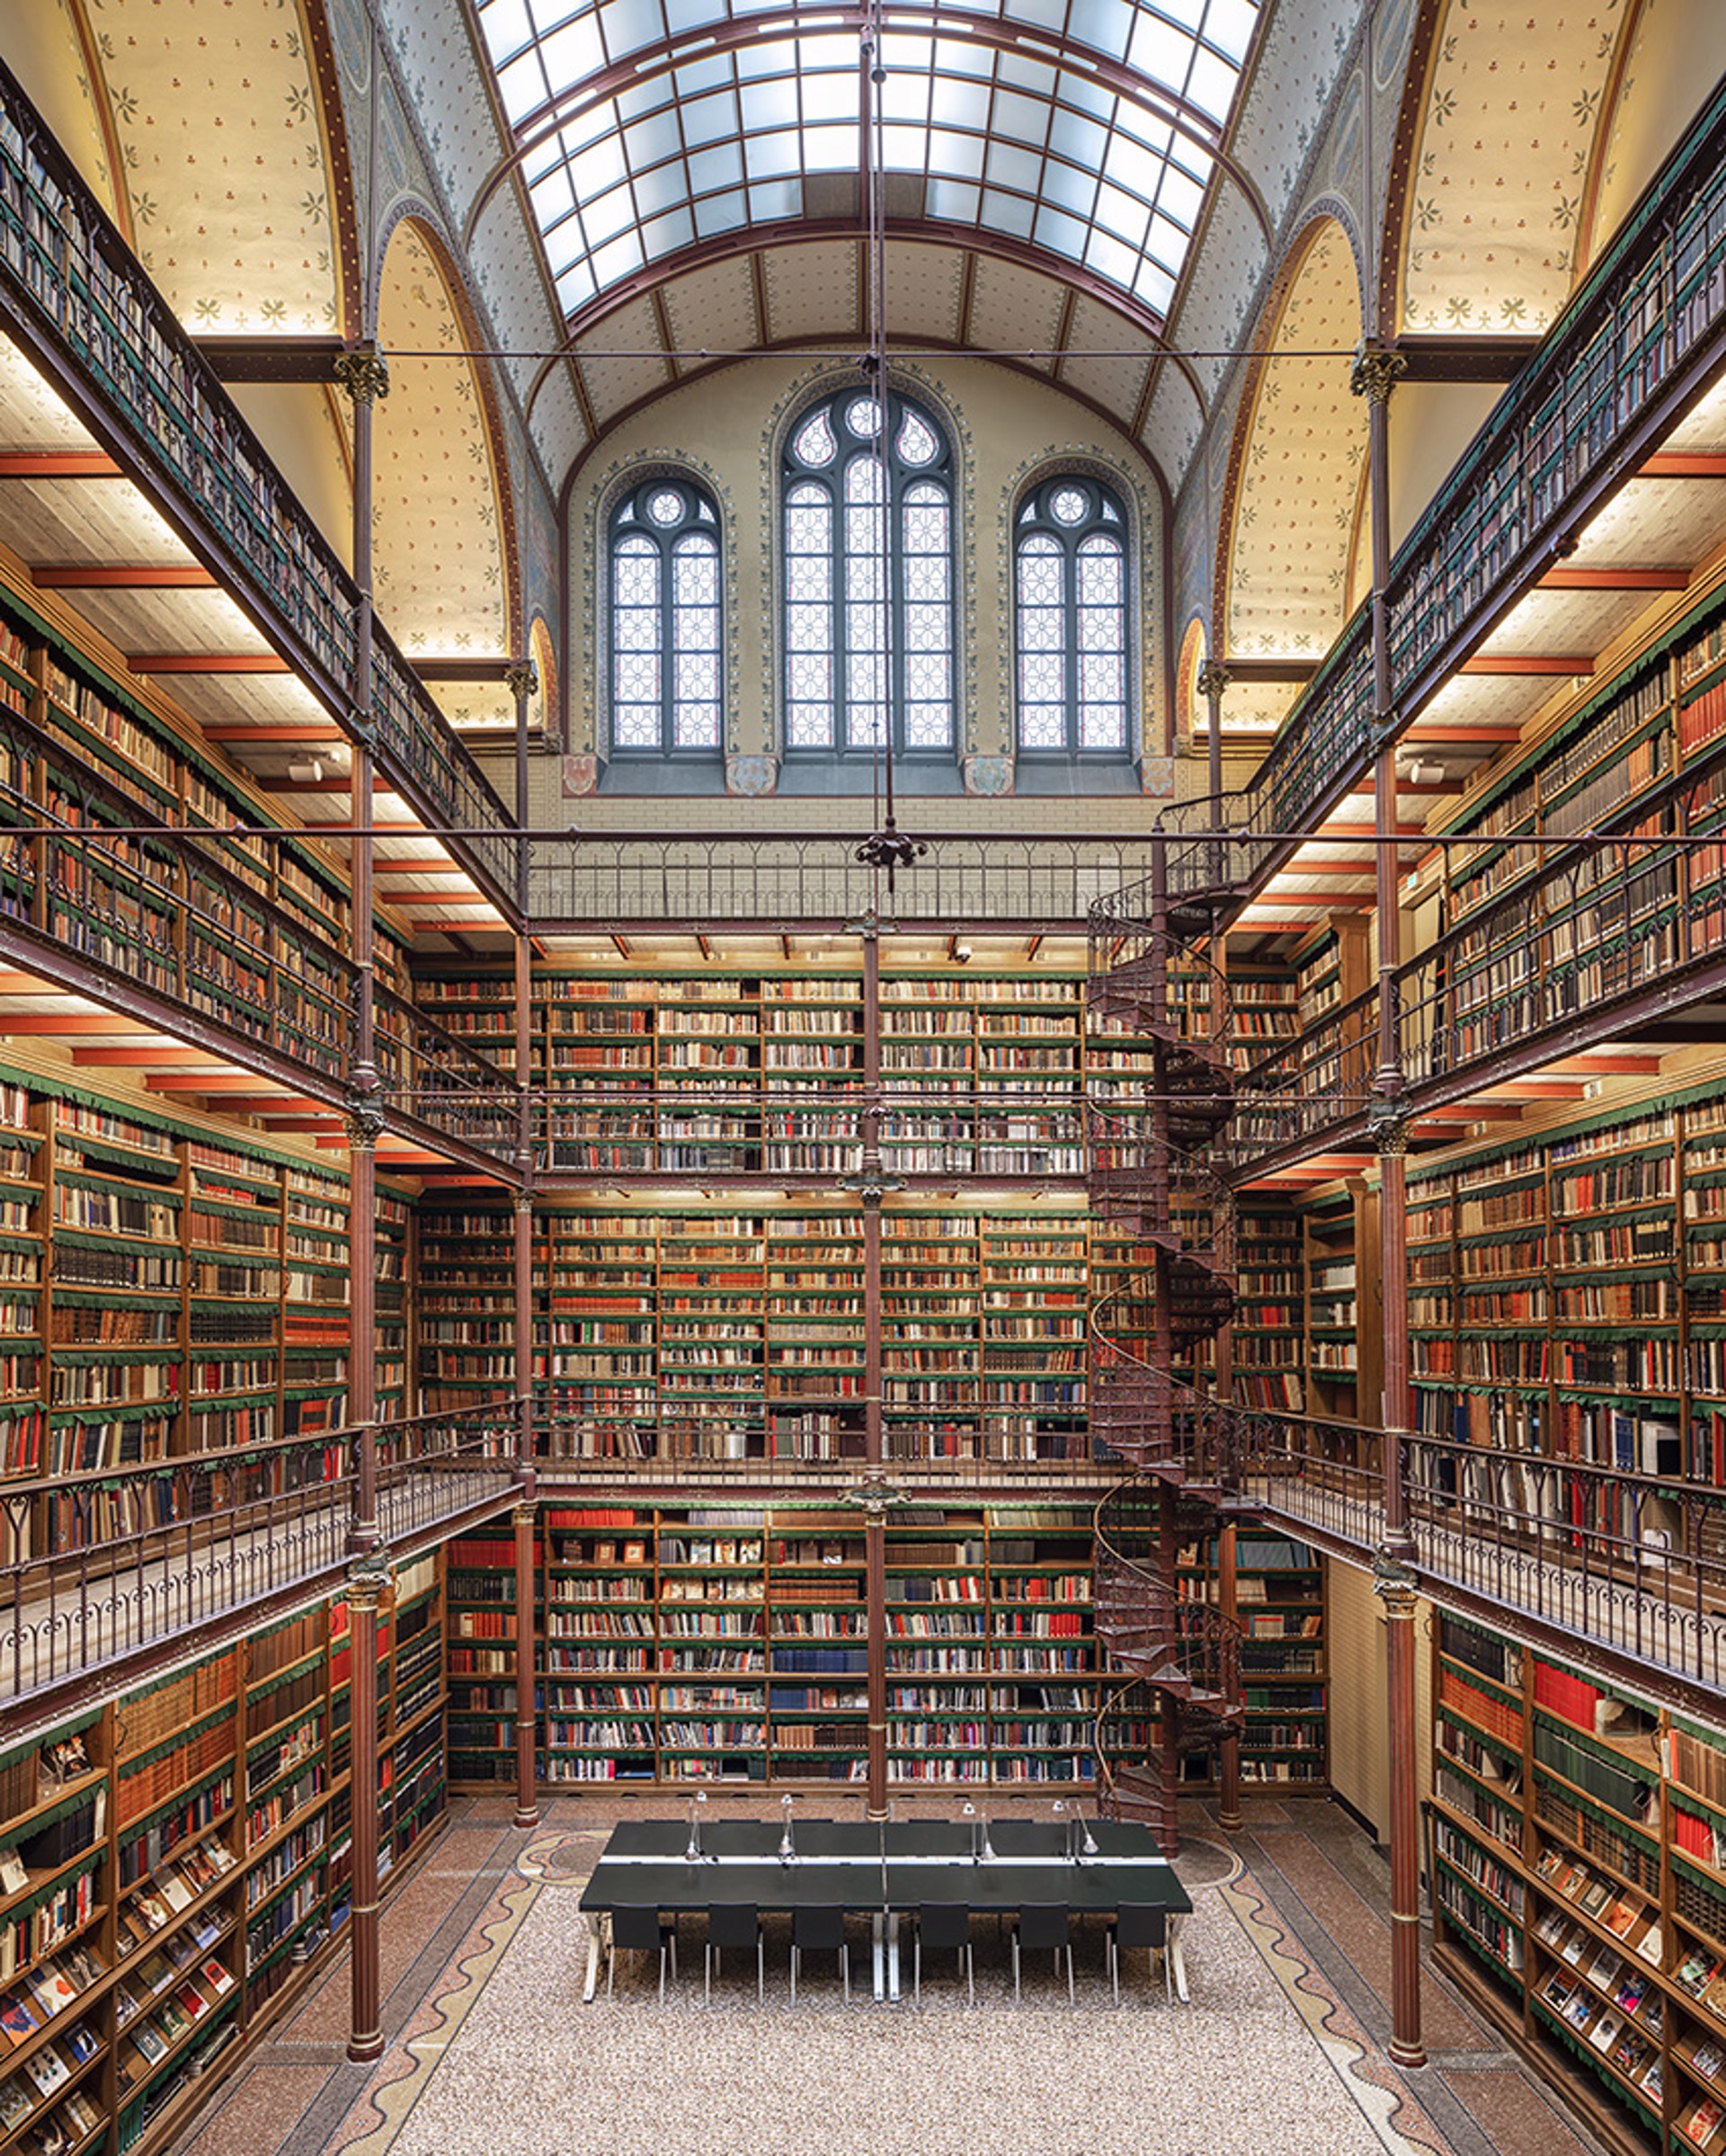 Cuypers Library, Amsterdam, Netherlands by Reinhard Goerner